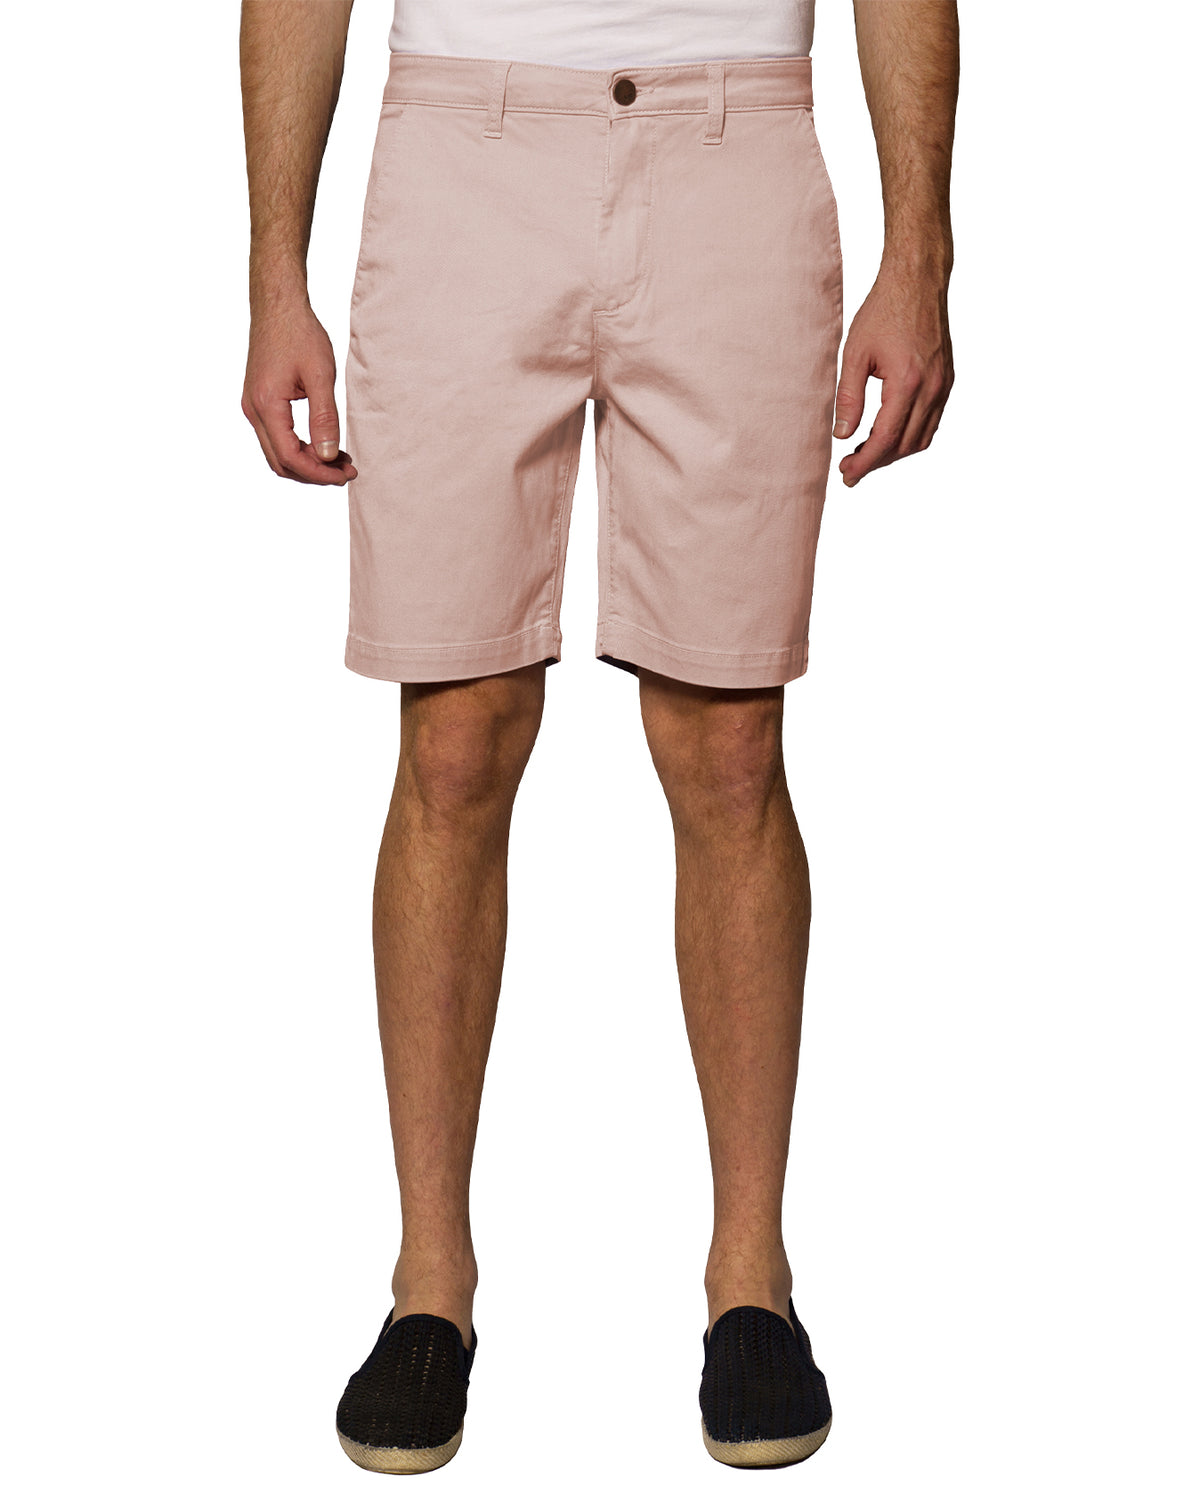 Cruise Pink Shorts